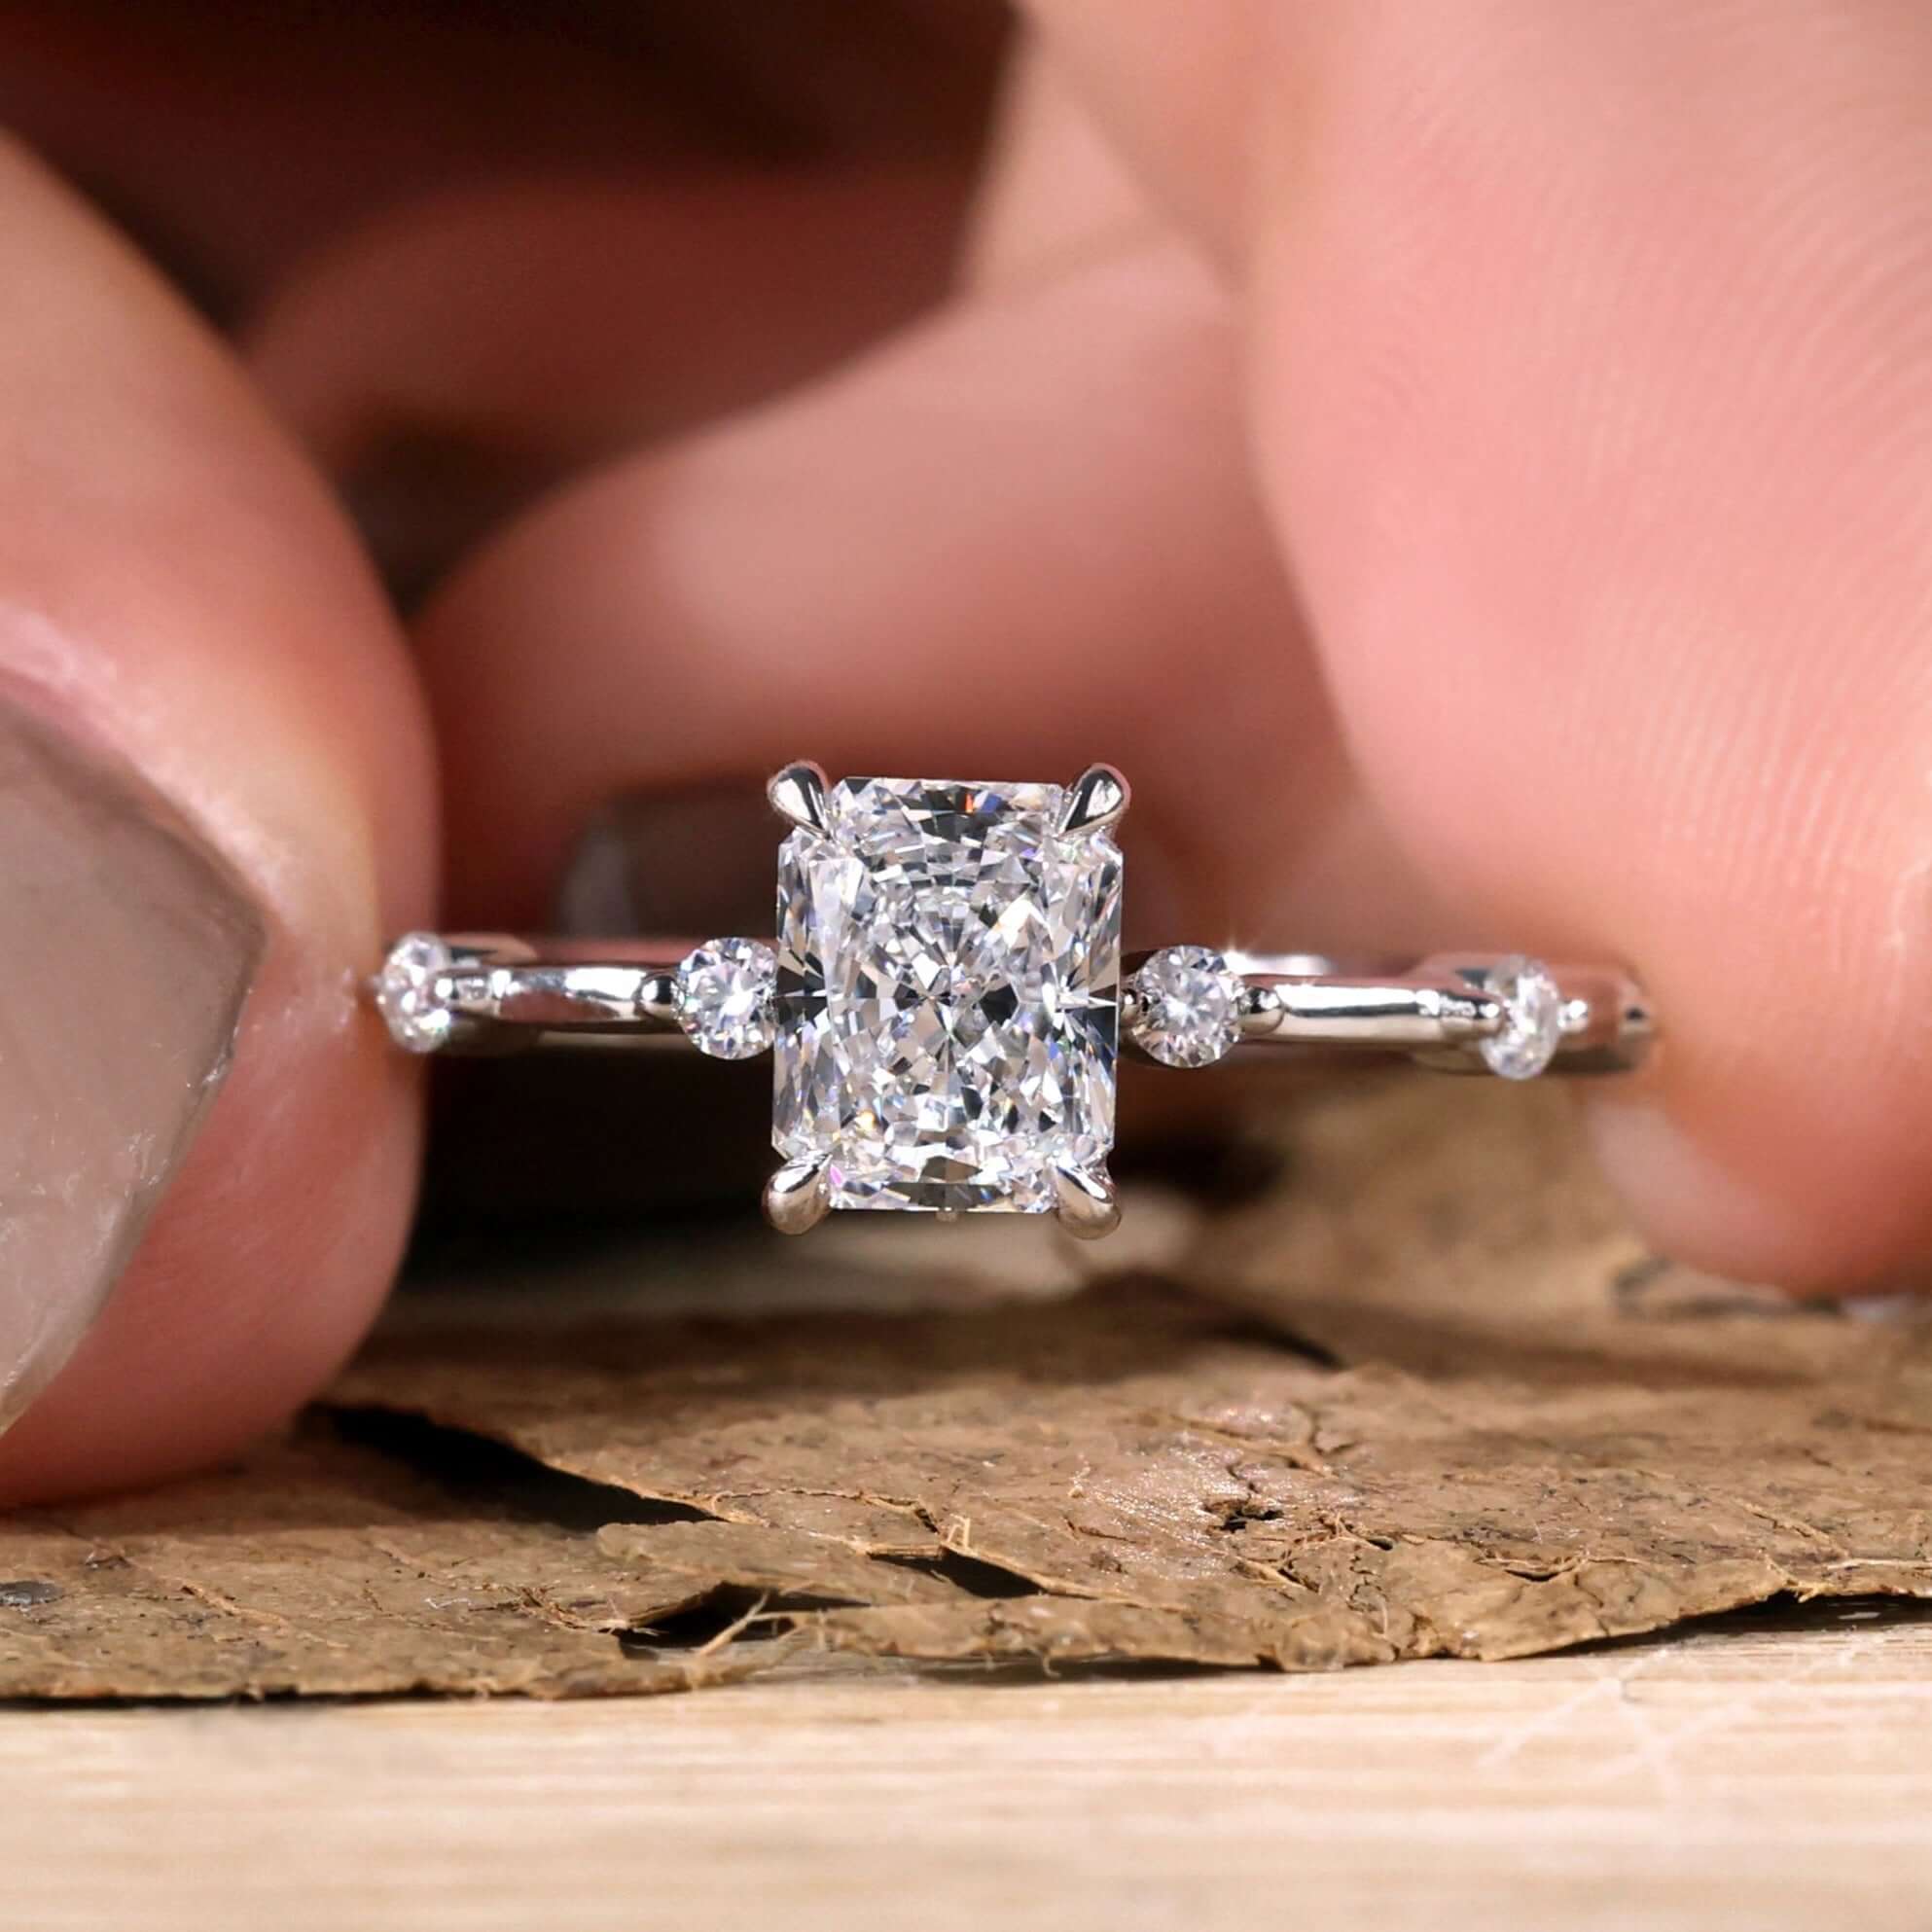 lab grown diamond engagement ring - diamondrensu